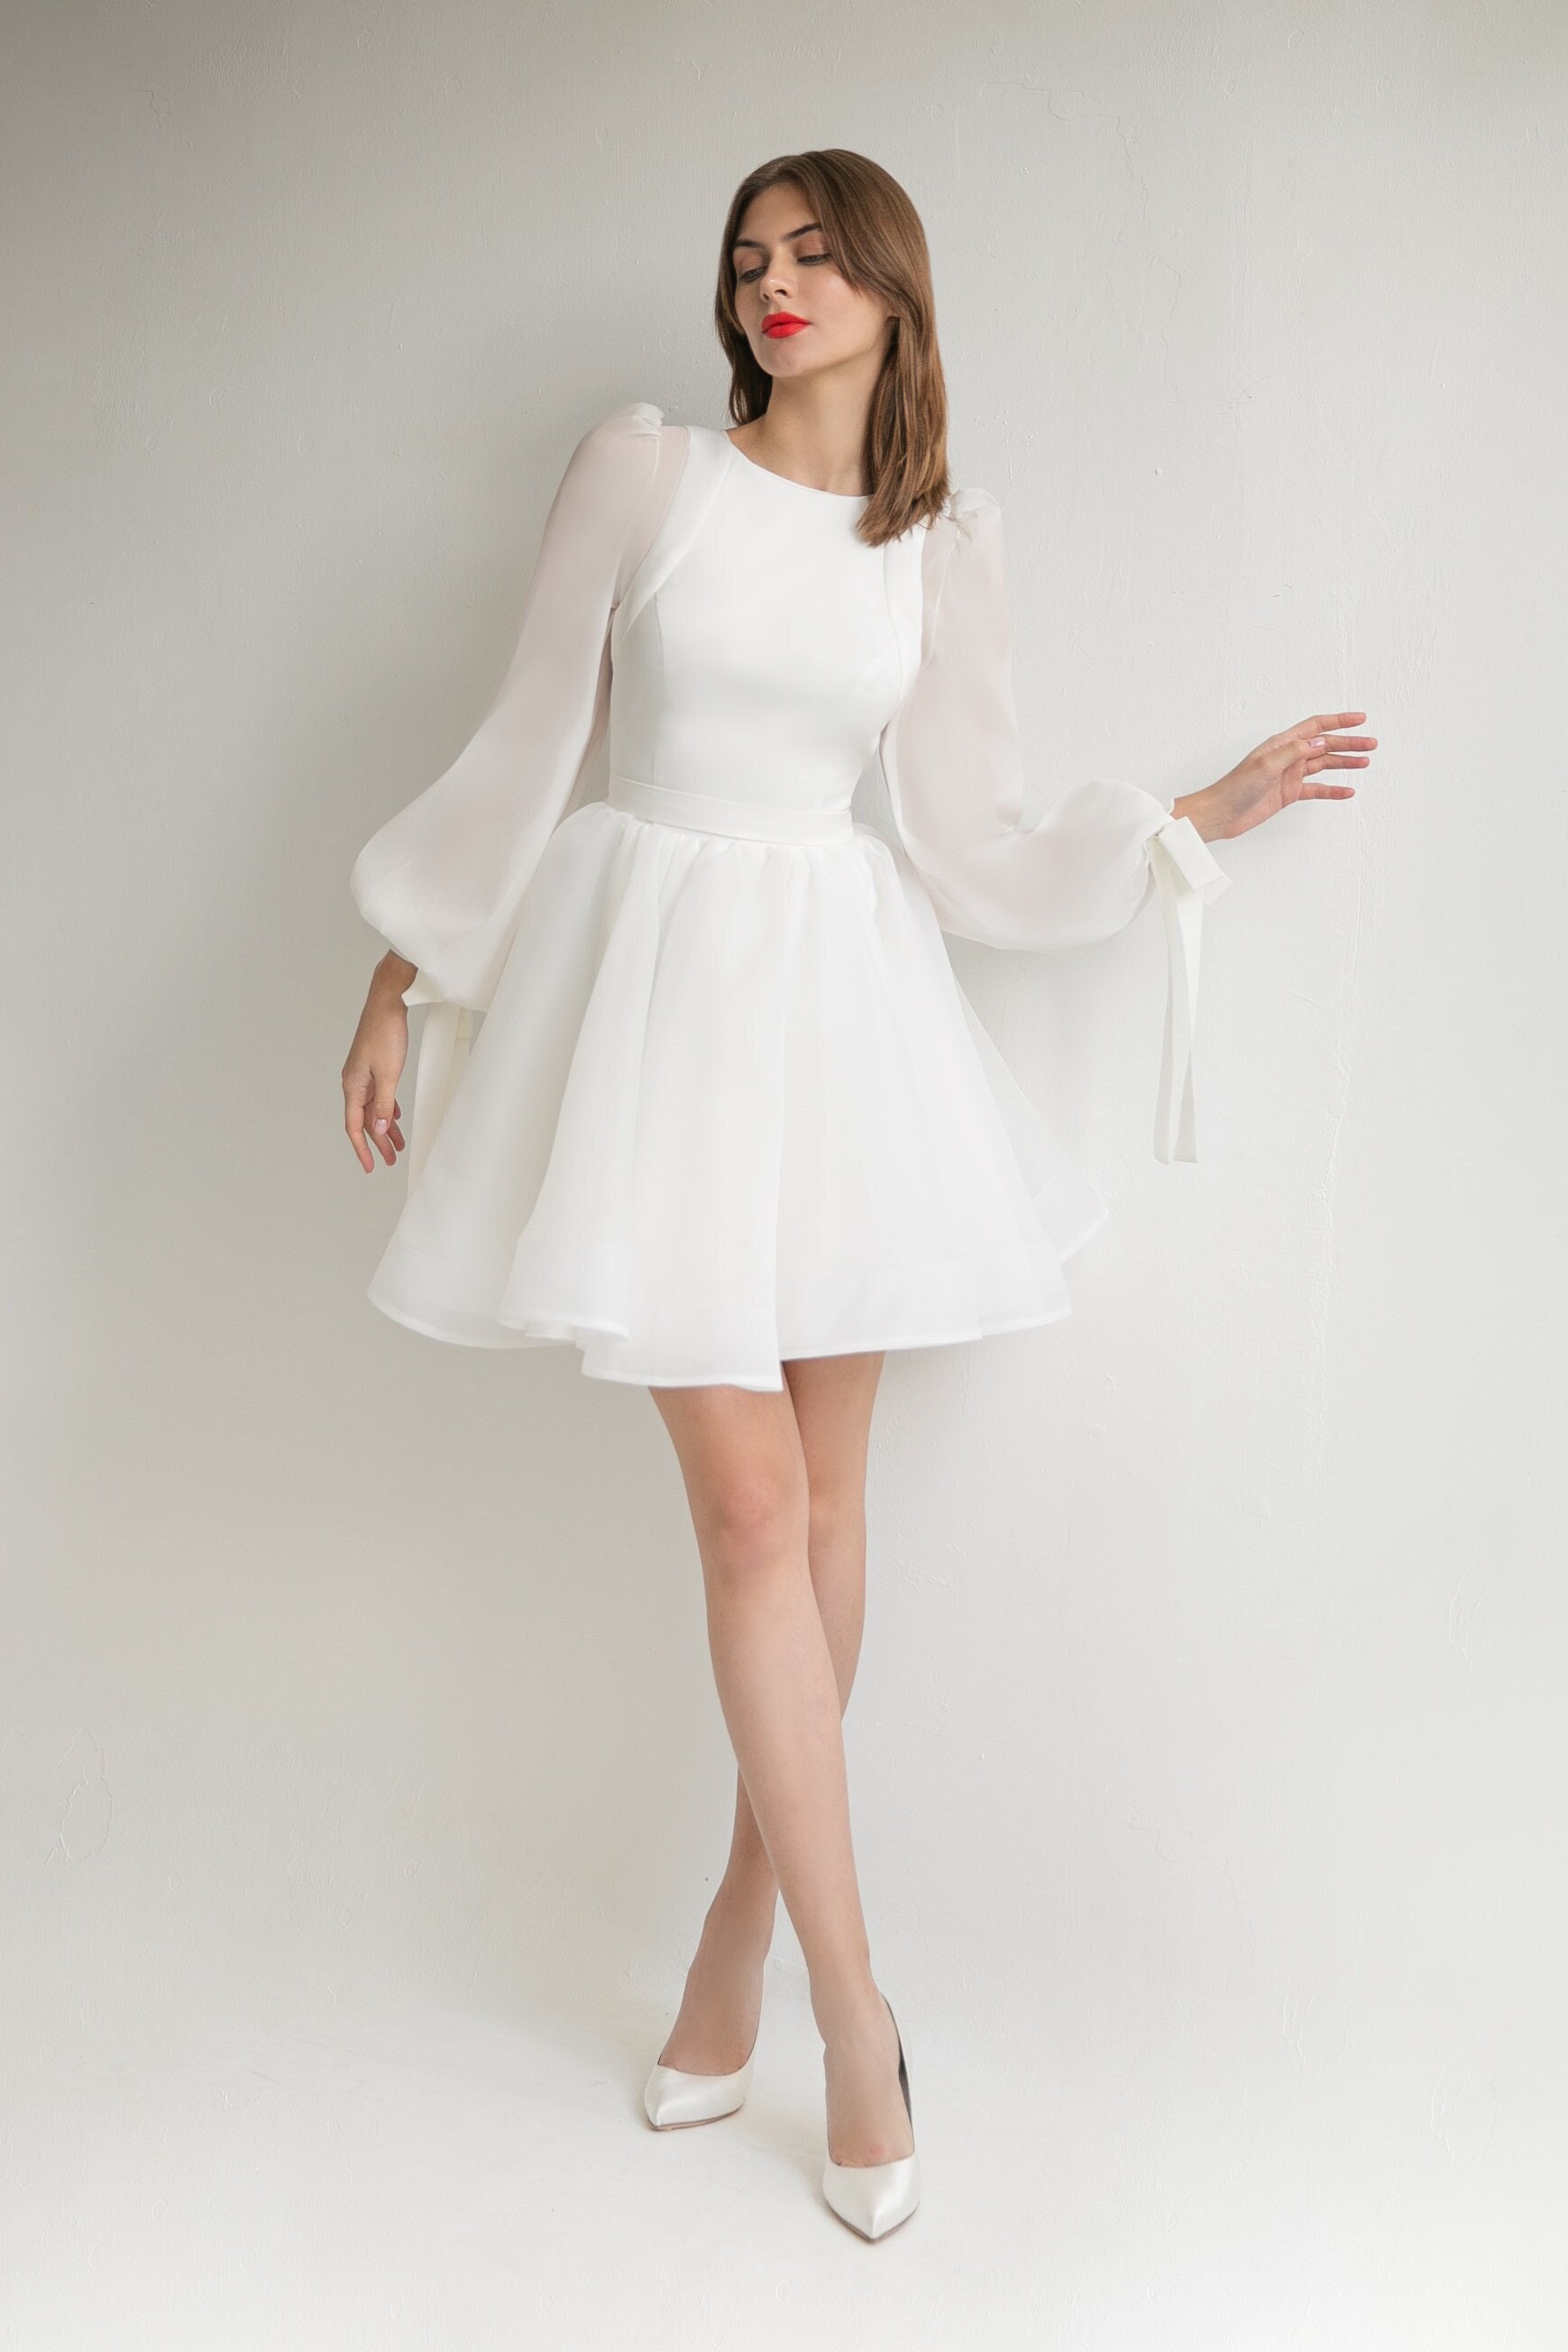 white long sleeve cocktail dress